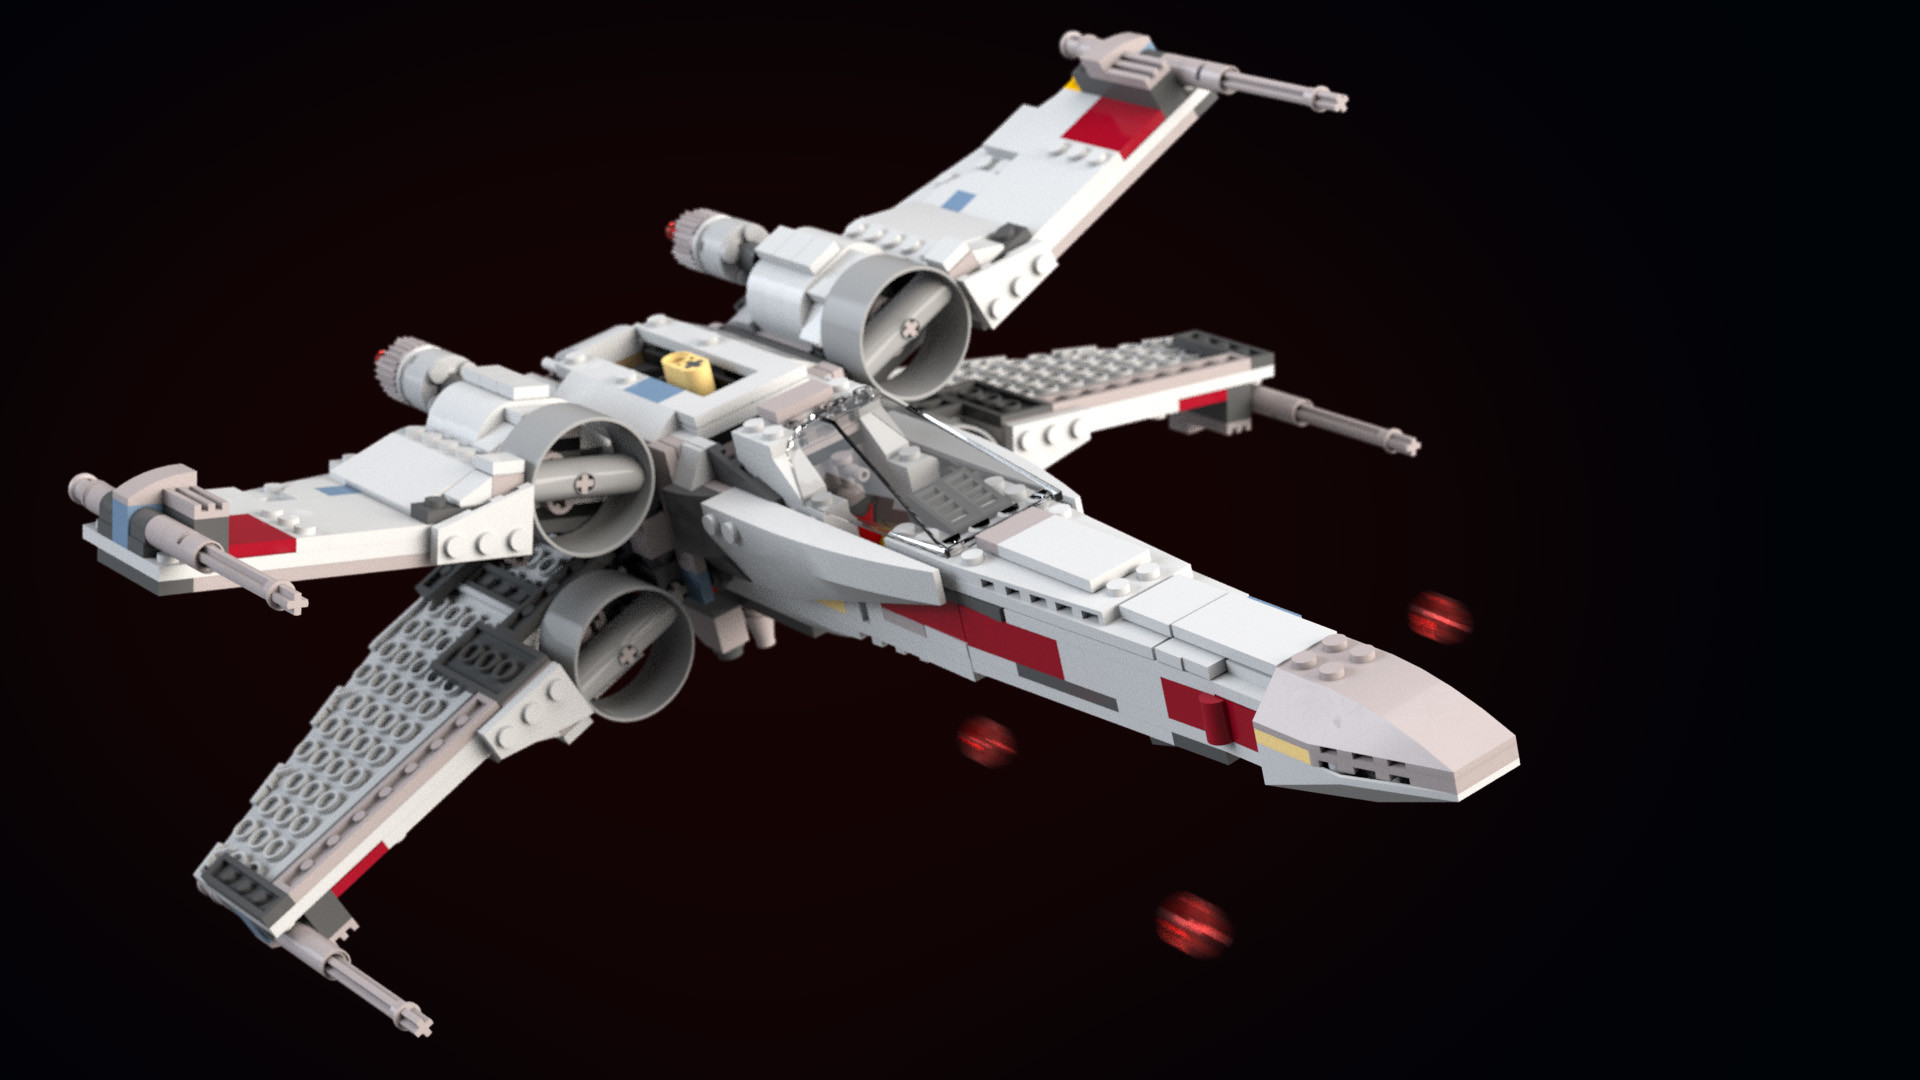 Arturo Monceau - Lego Star Wars Ships